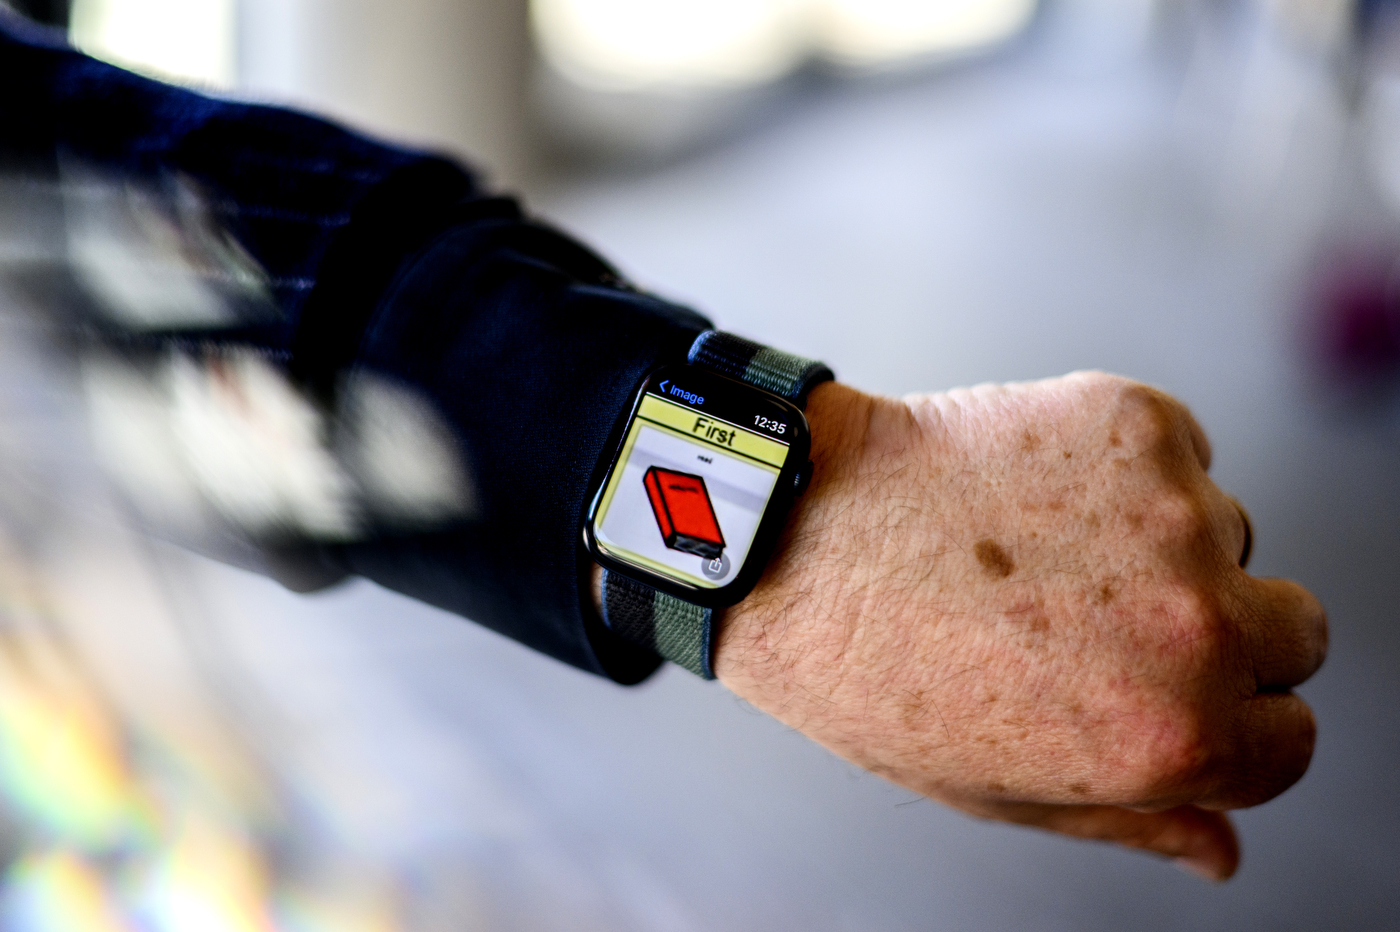 Ralf Schlosser wearing smartwatch with assistive communication technology